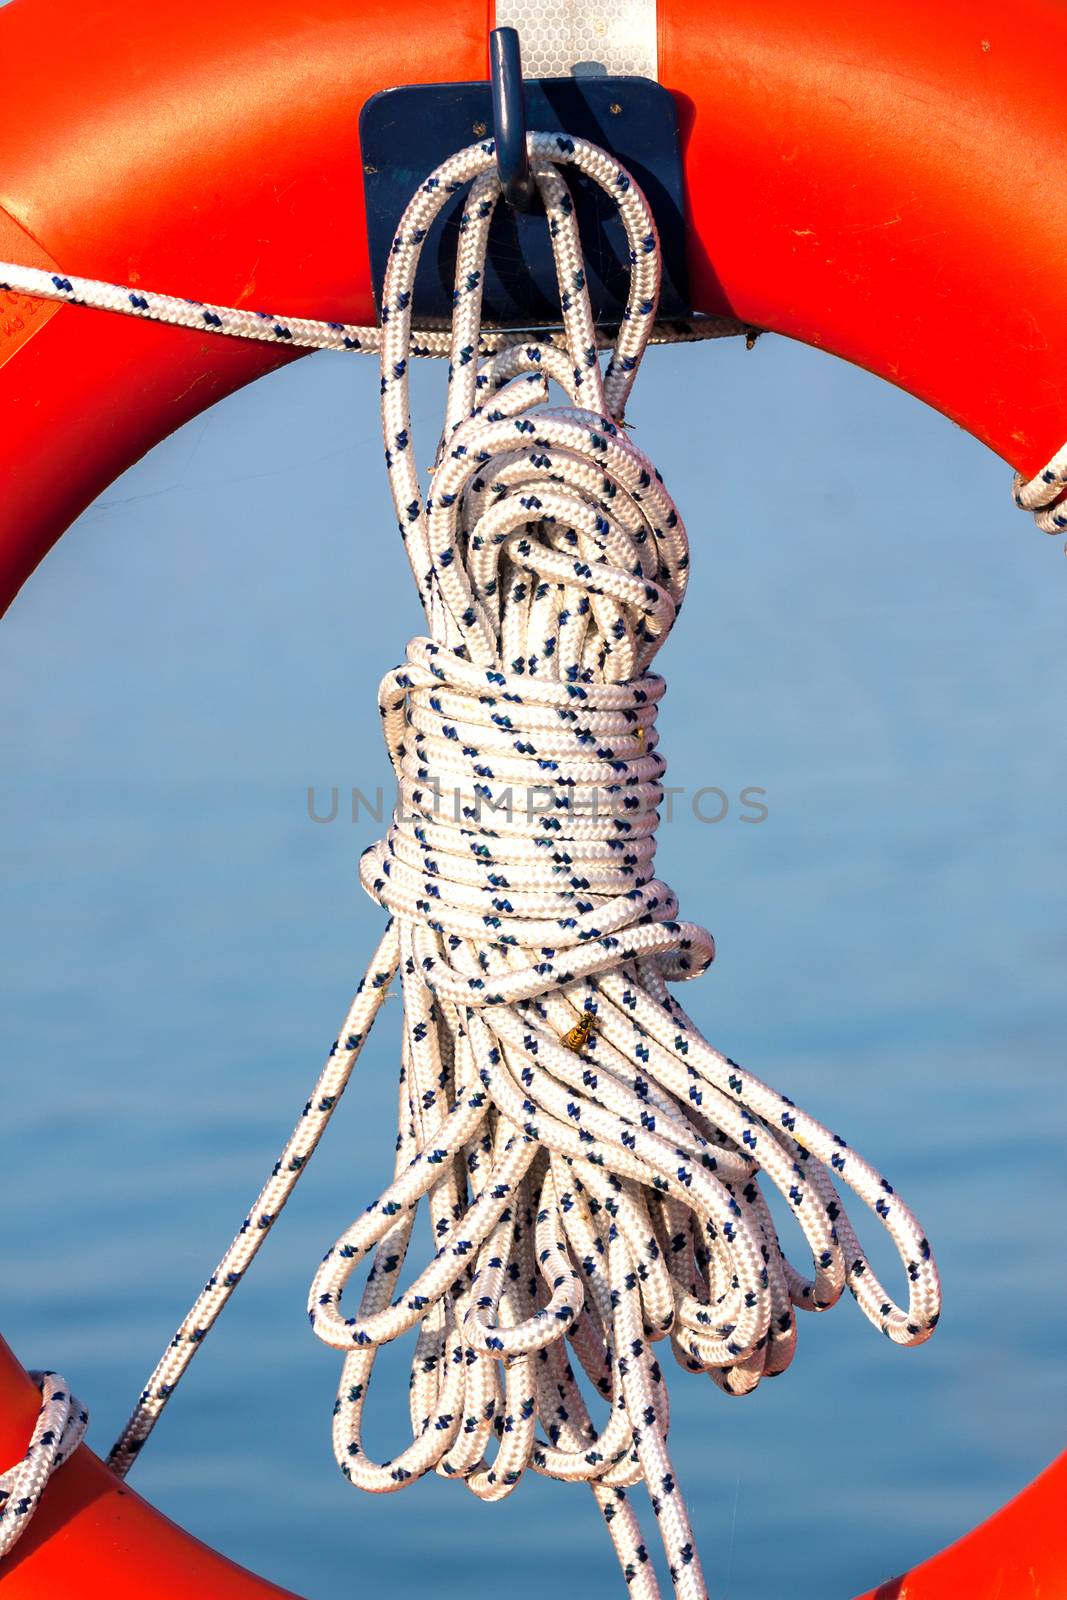 Orange life buoy with rope by Digoarpi